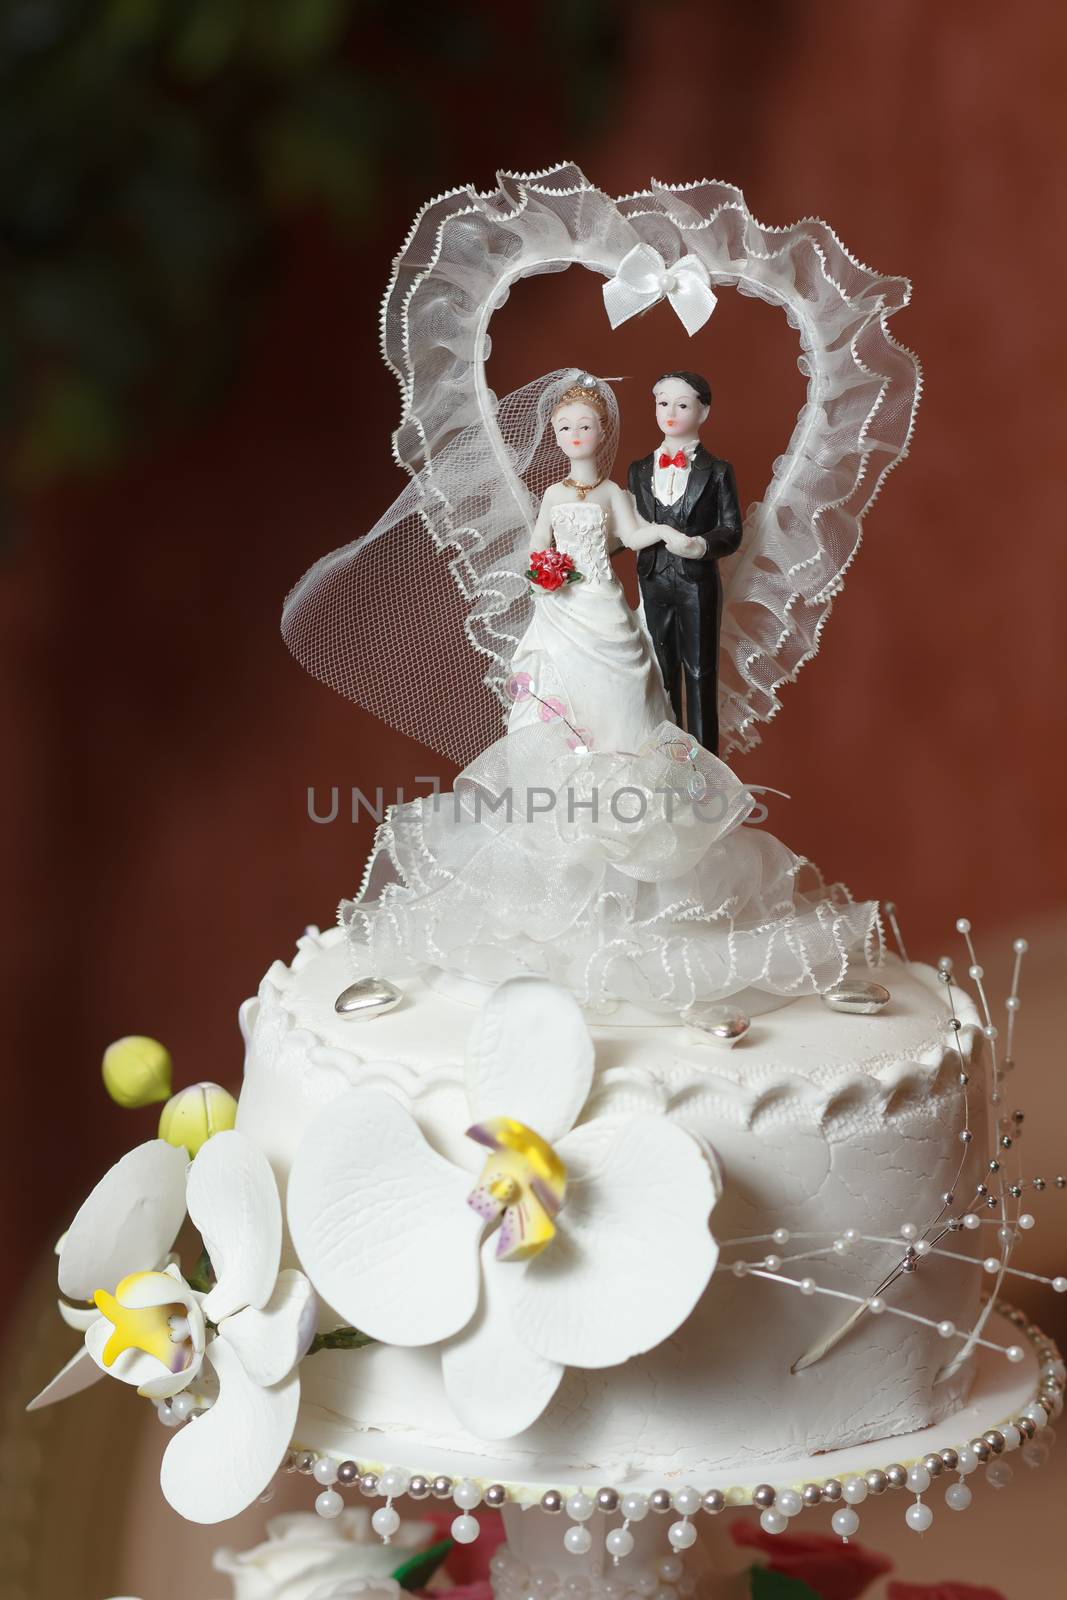 Wedding Cake on blurry background by mrakor